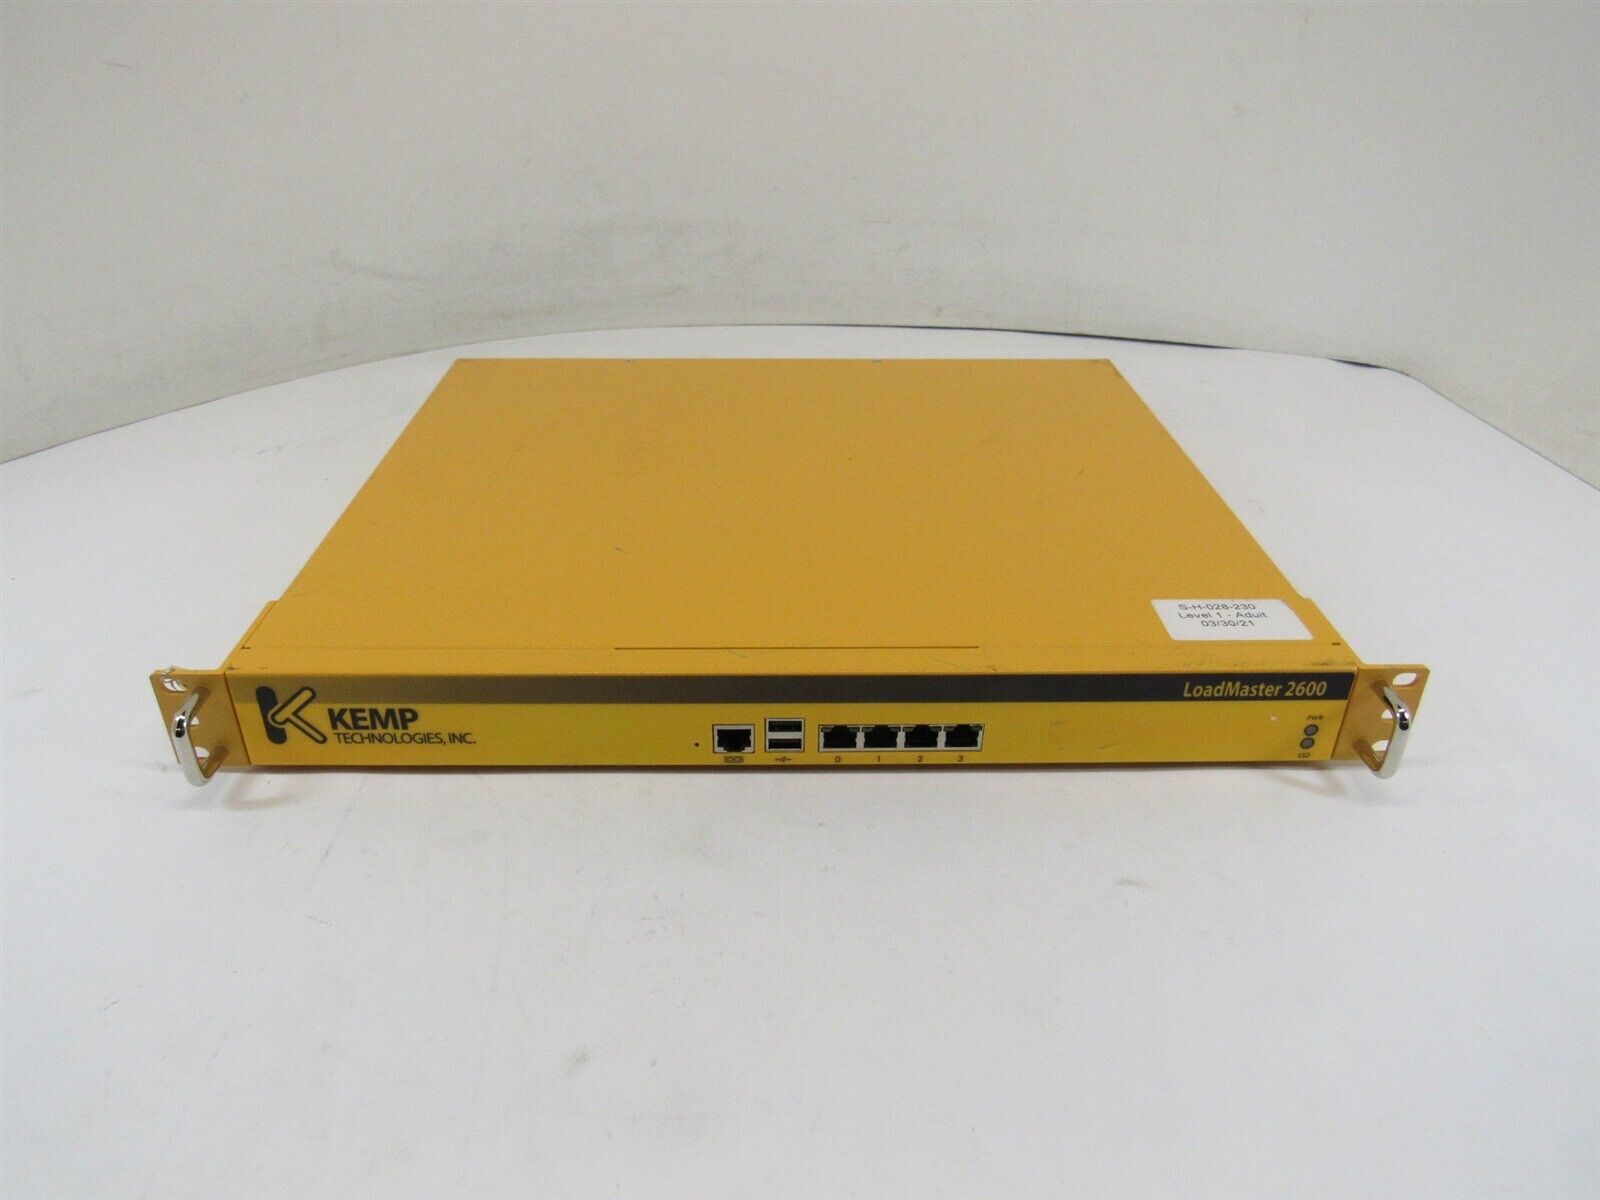 Kemp NSA3110-LM2600 Loadmaster 2600 Server Load Balancer RMK